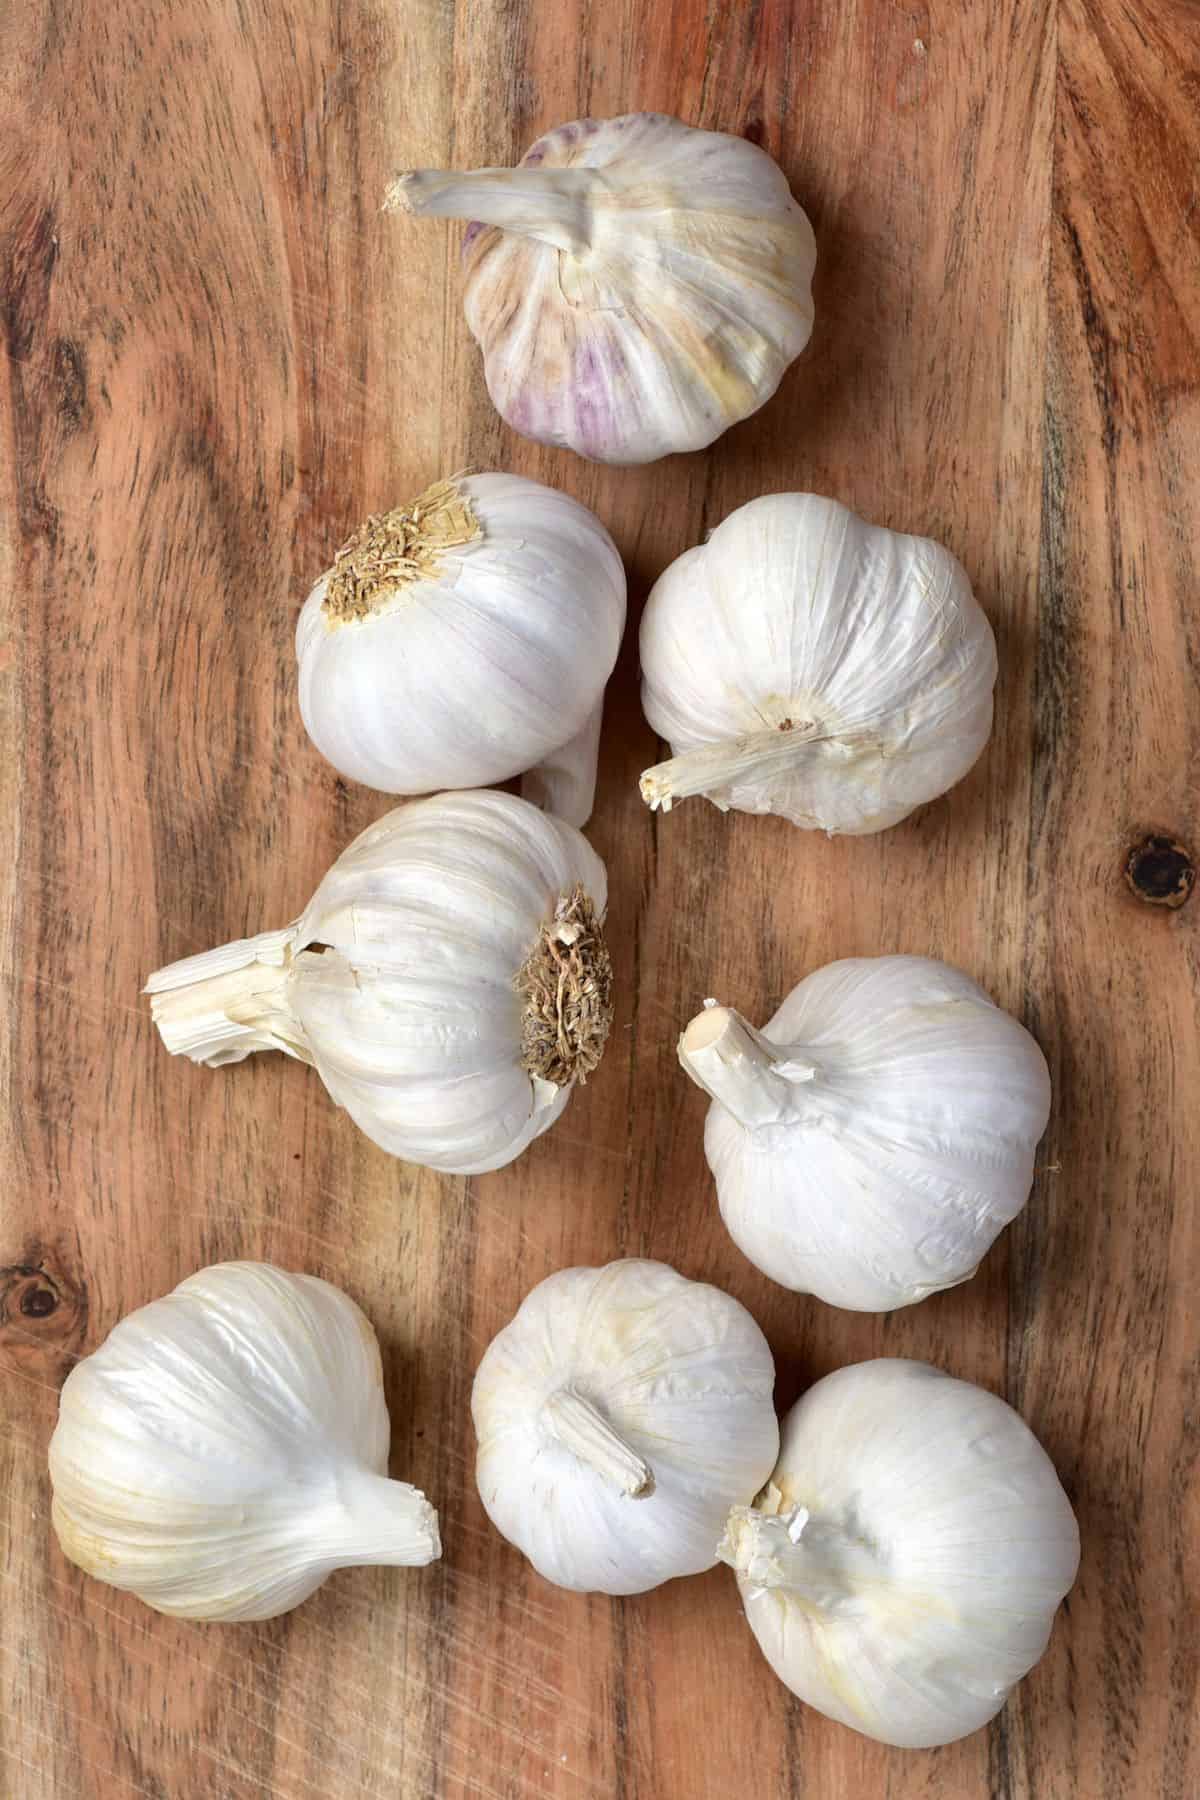 Eight full heads of garlic on a chopping board